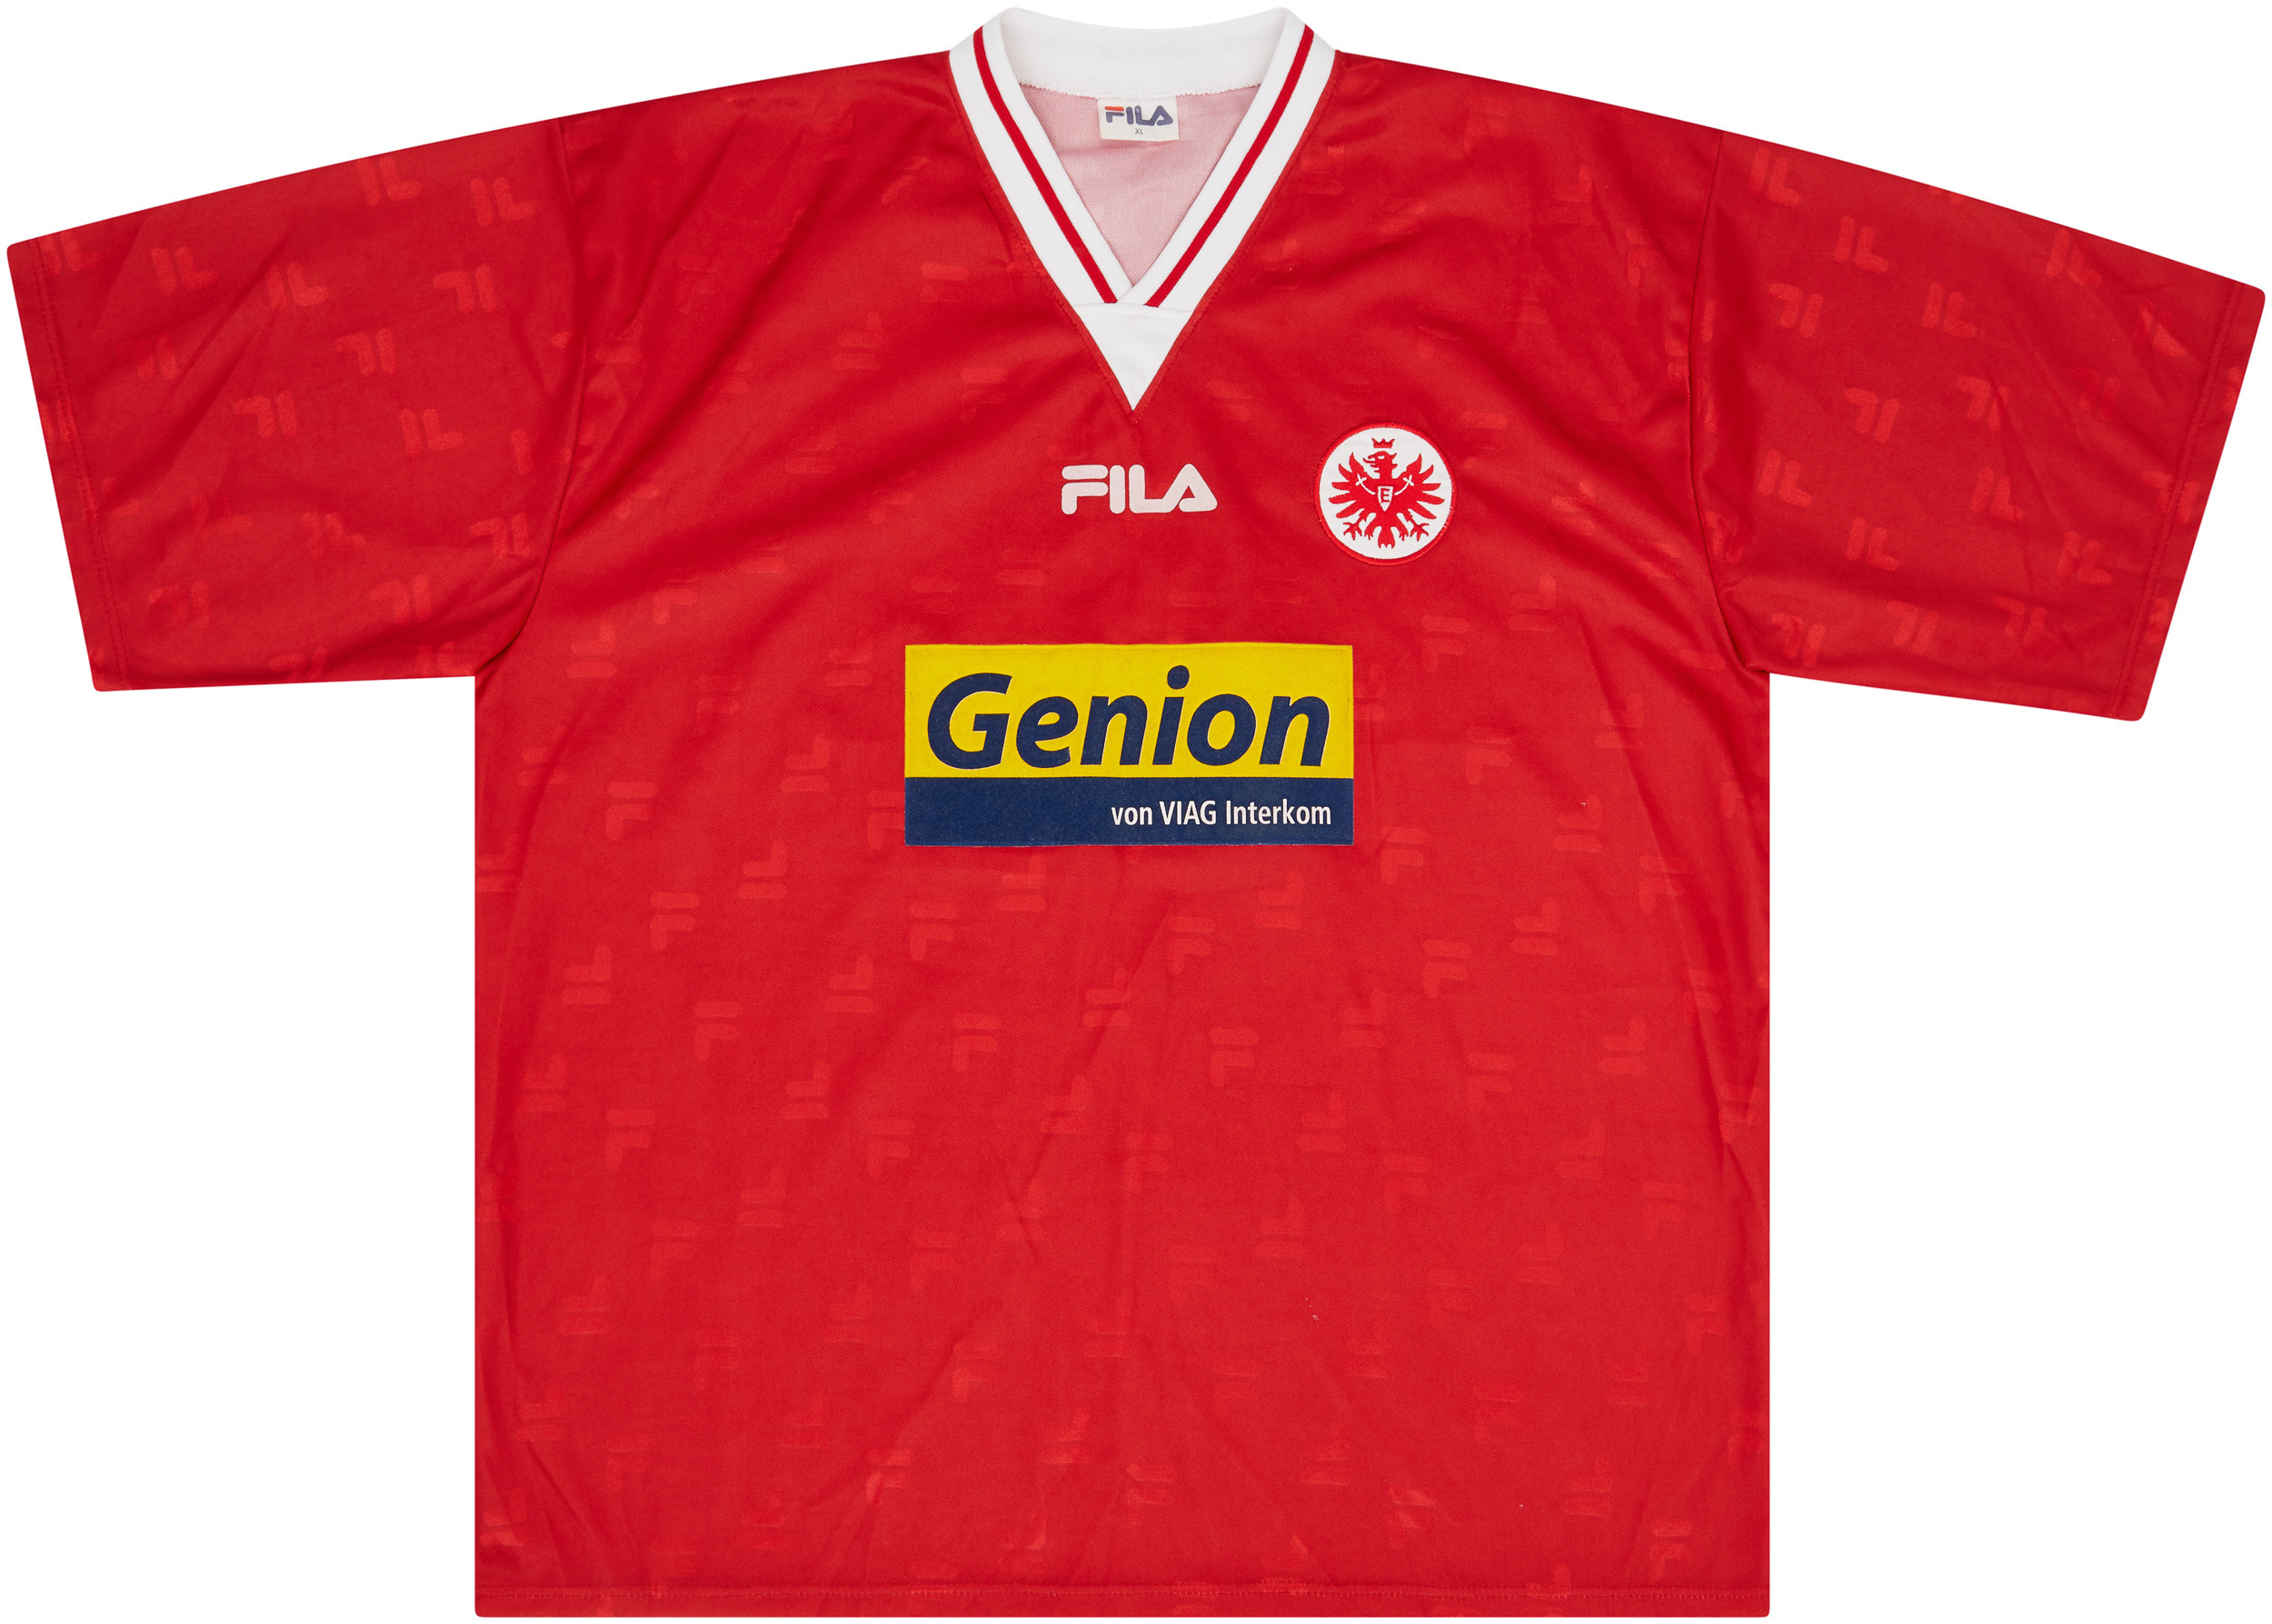 Eintracht Frankfurt  home shirt  (Original)